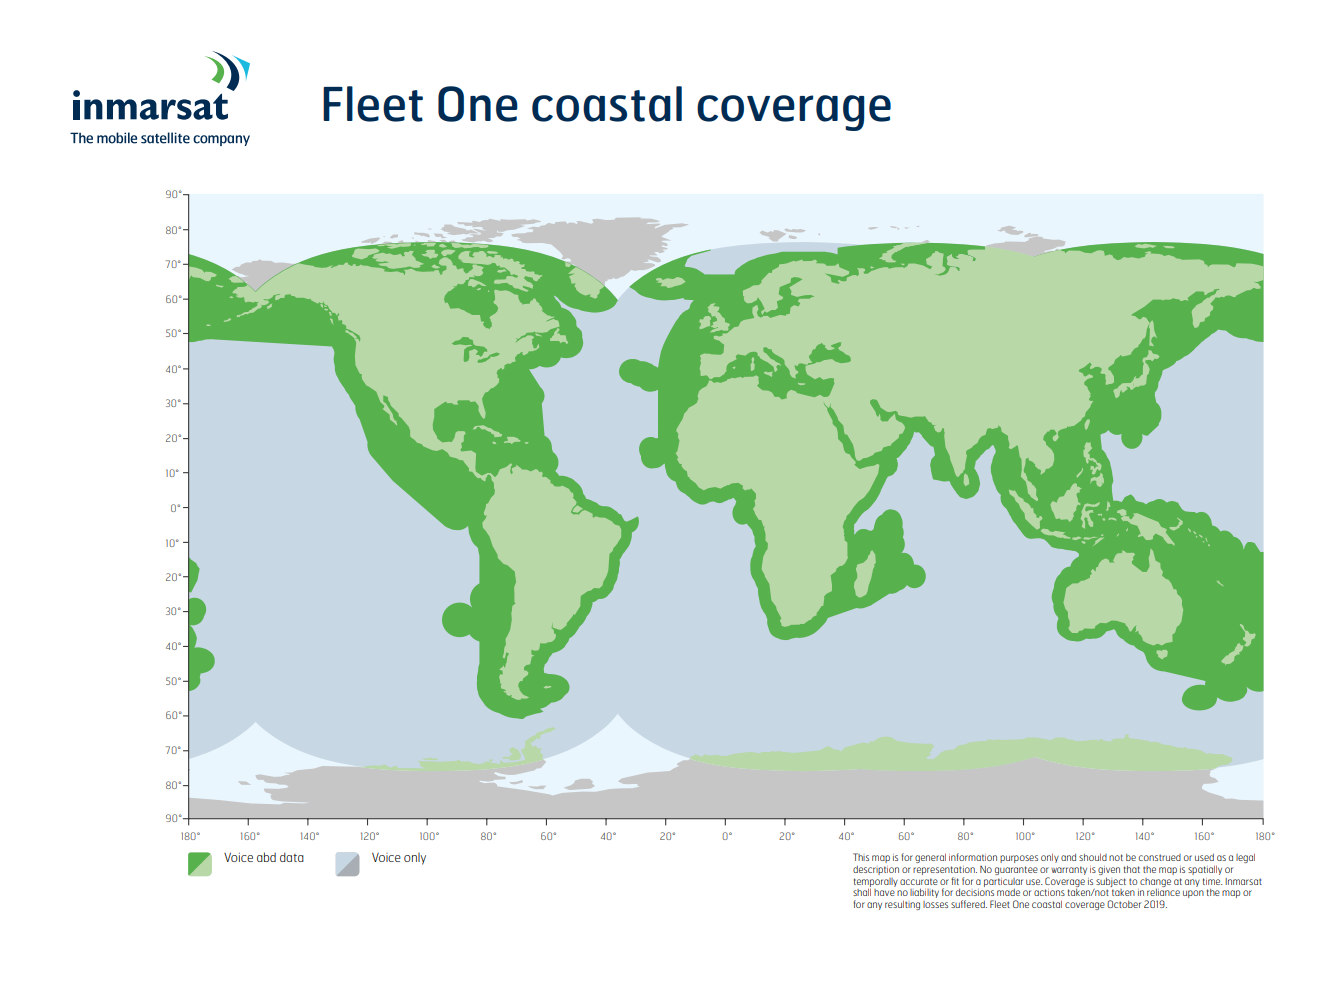 Inmarsat Fleet One Coastal Coverage Map